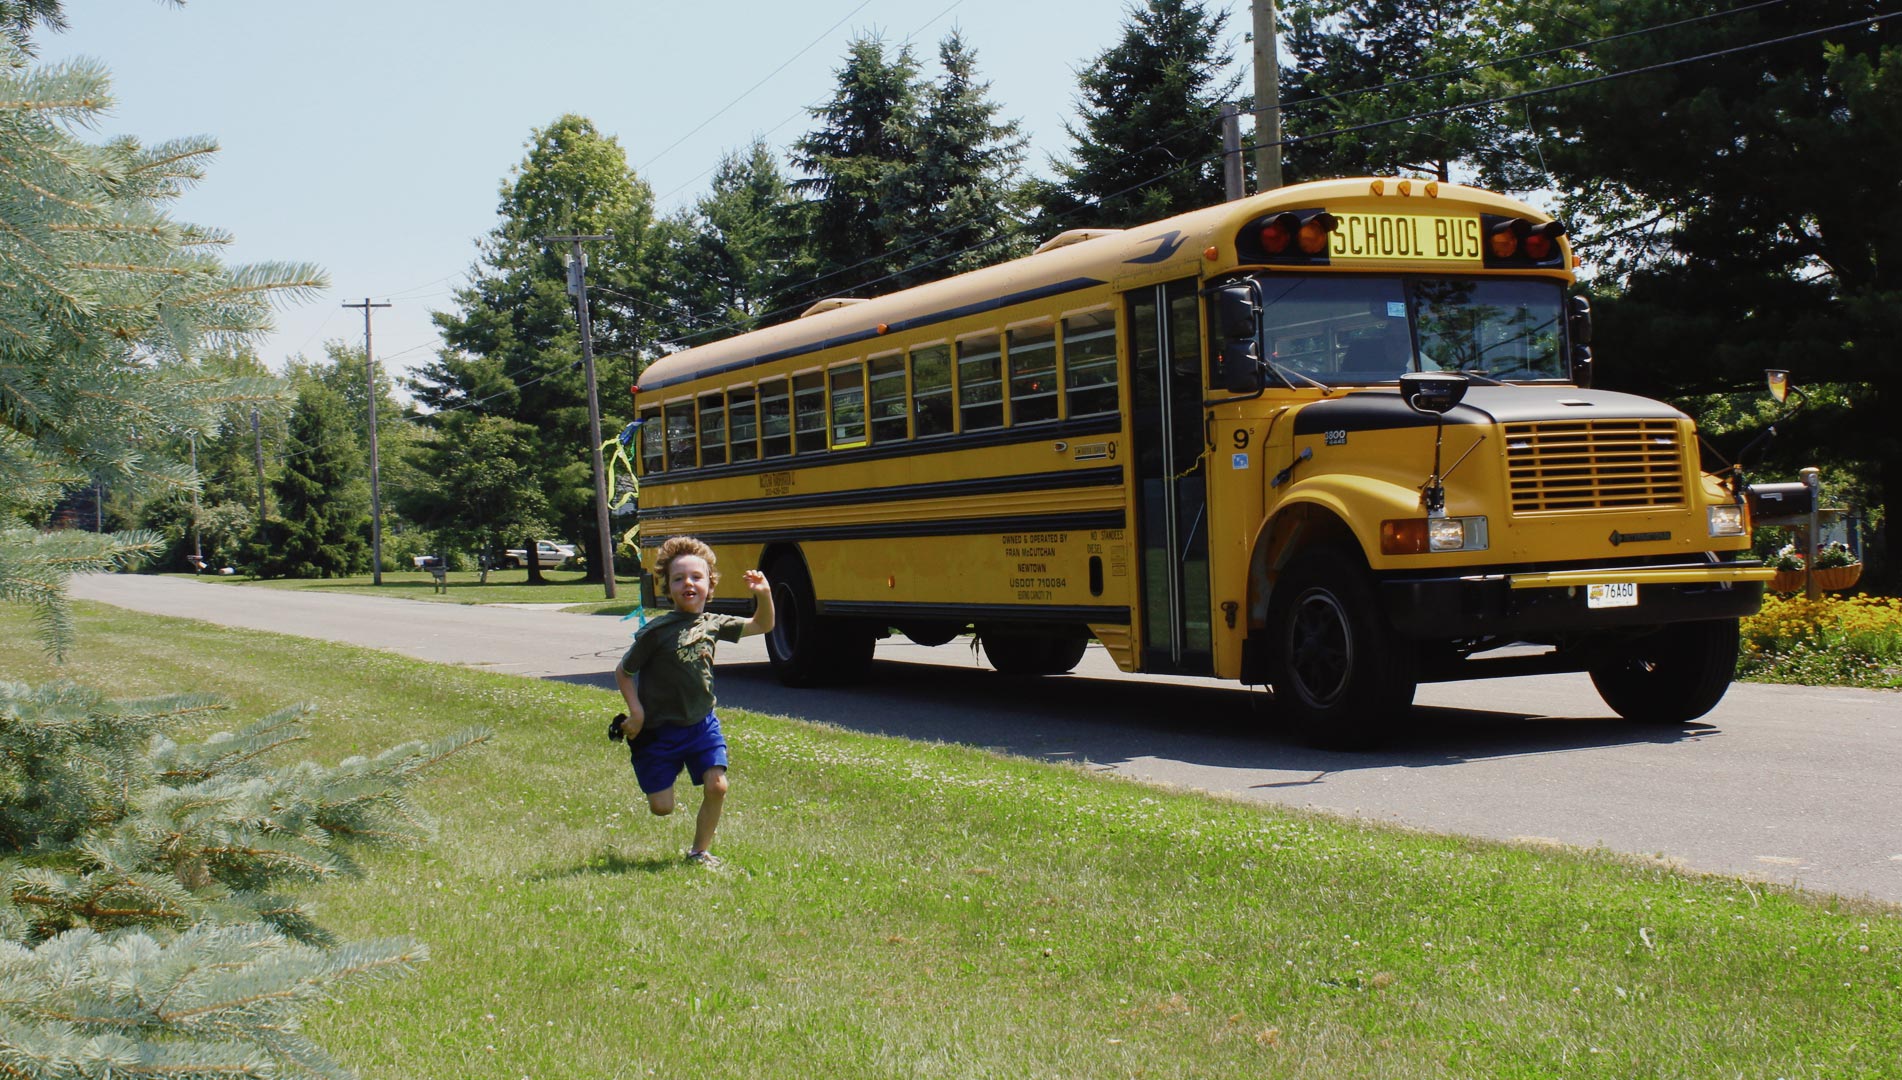 Daniel Barden races the school bus.